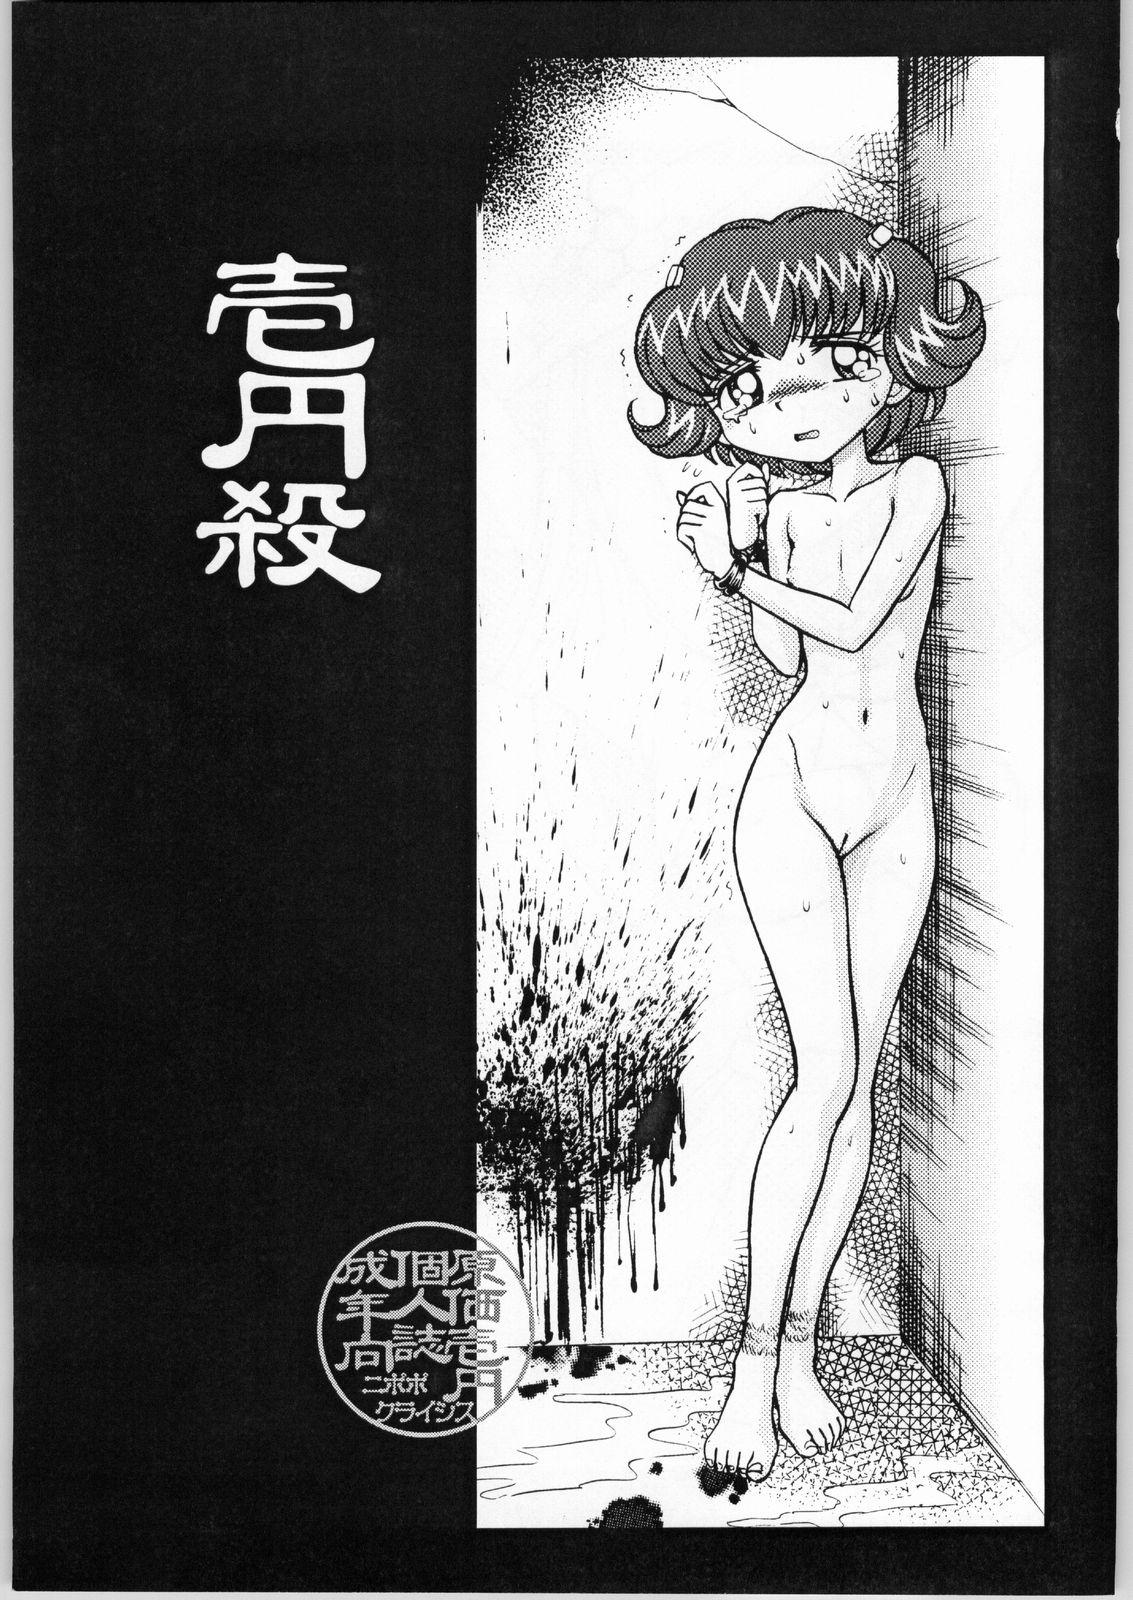 Show Ichien Satsu - Ojamajo doremi Tenchi muyo Martian successor nadesico Turn a gundam Hand maid may Medabots Hamtaro Furry - Page 2